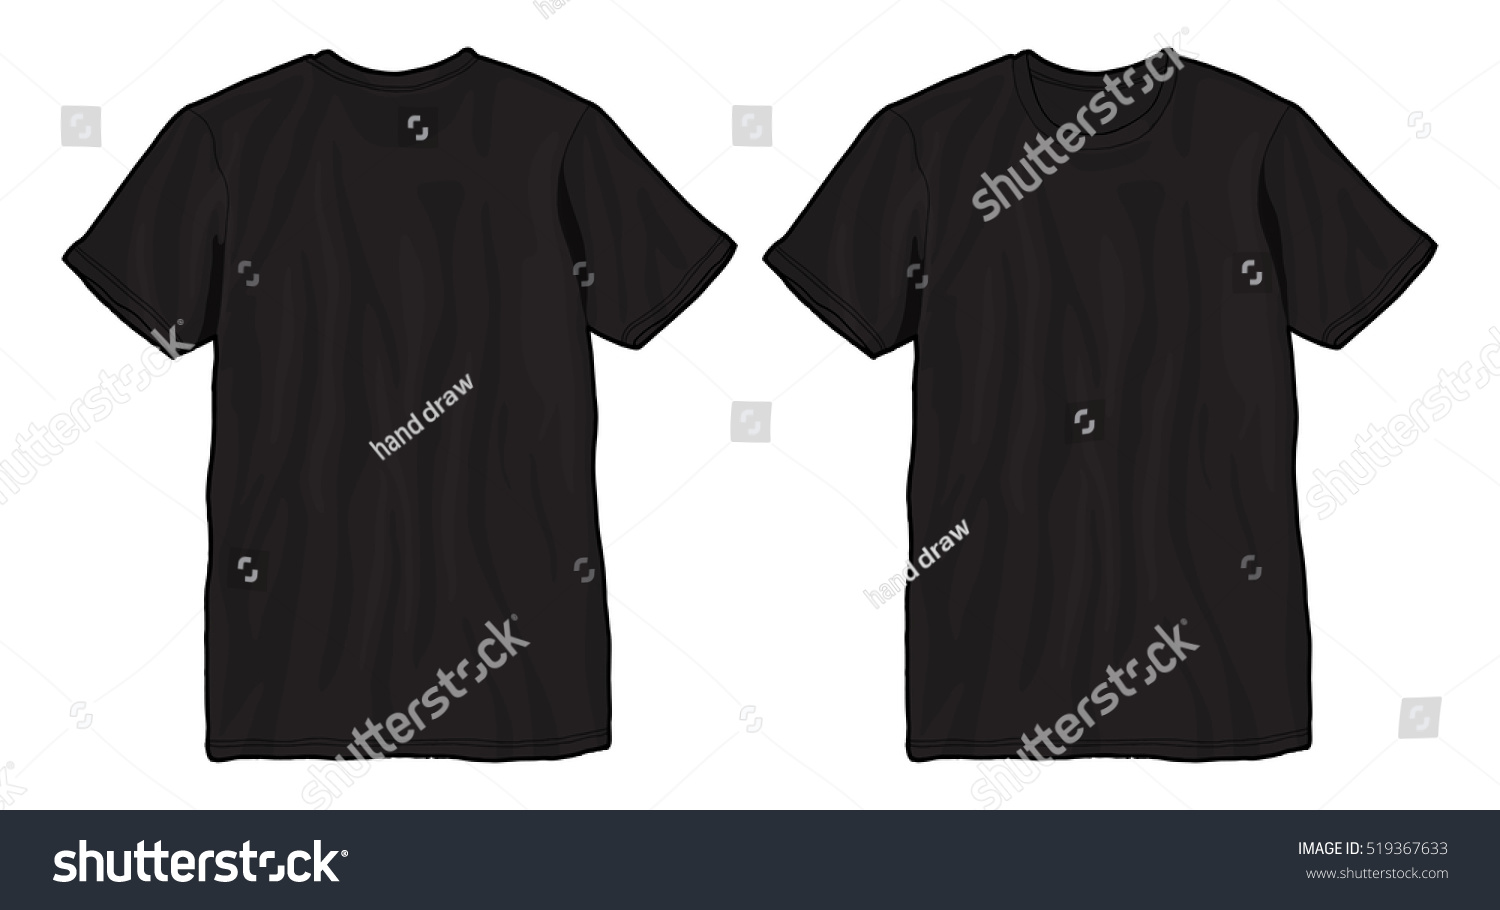 Download Blank T Shirt Template Black Tshirt Stock Vector 519367633 - Shutterstock